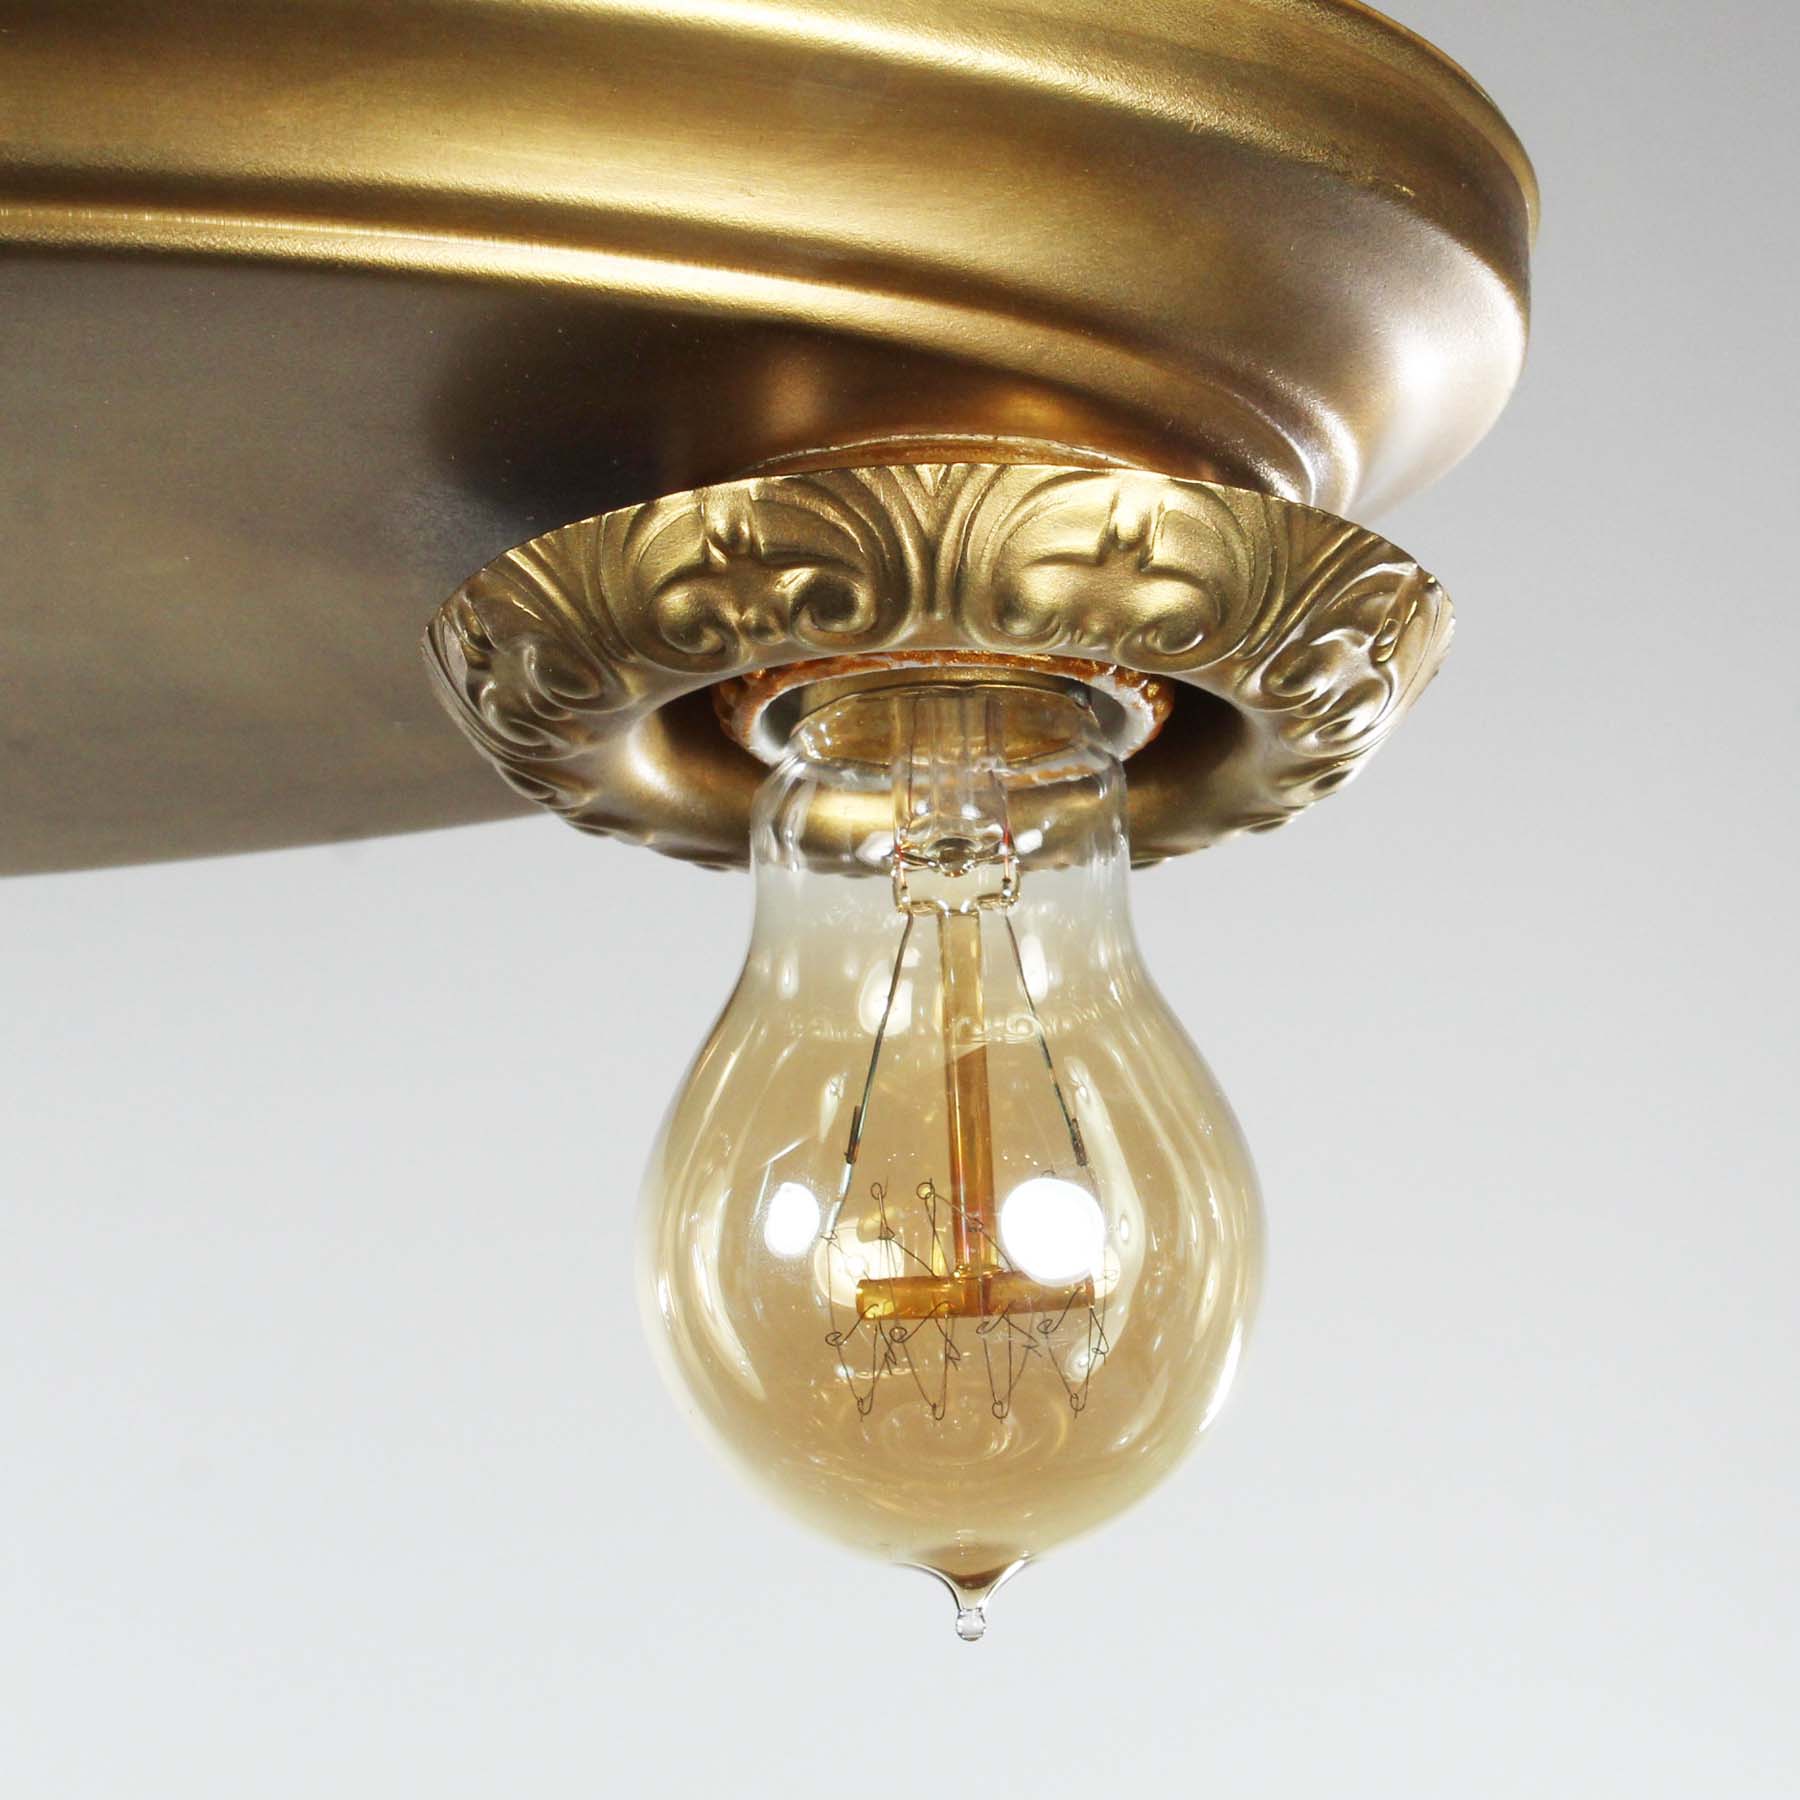 Matching Flush Mount Fixtures in Brass, Antique Lighting-72067